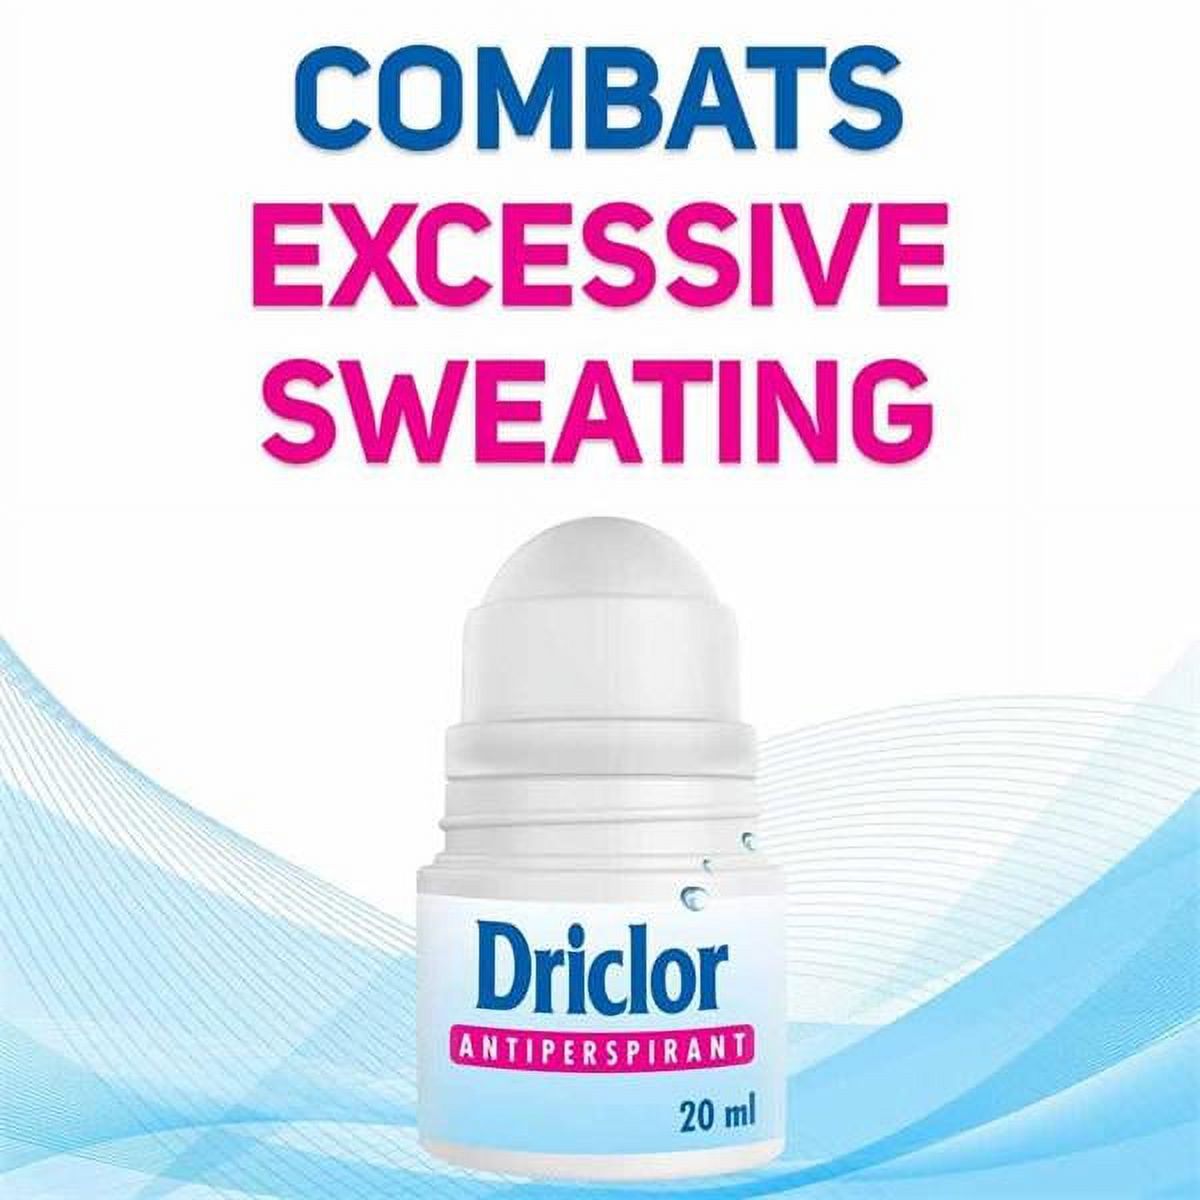 Driclor Antiperspirant Unisex Dry Roll-on Deodorant 20 ml. - image 2 of 6